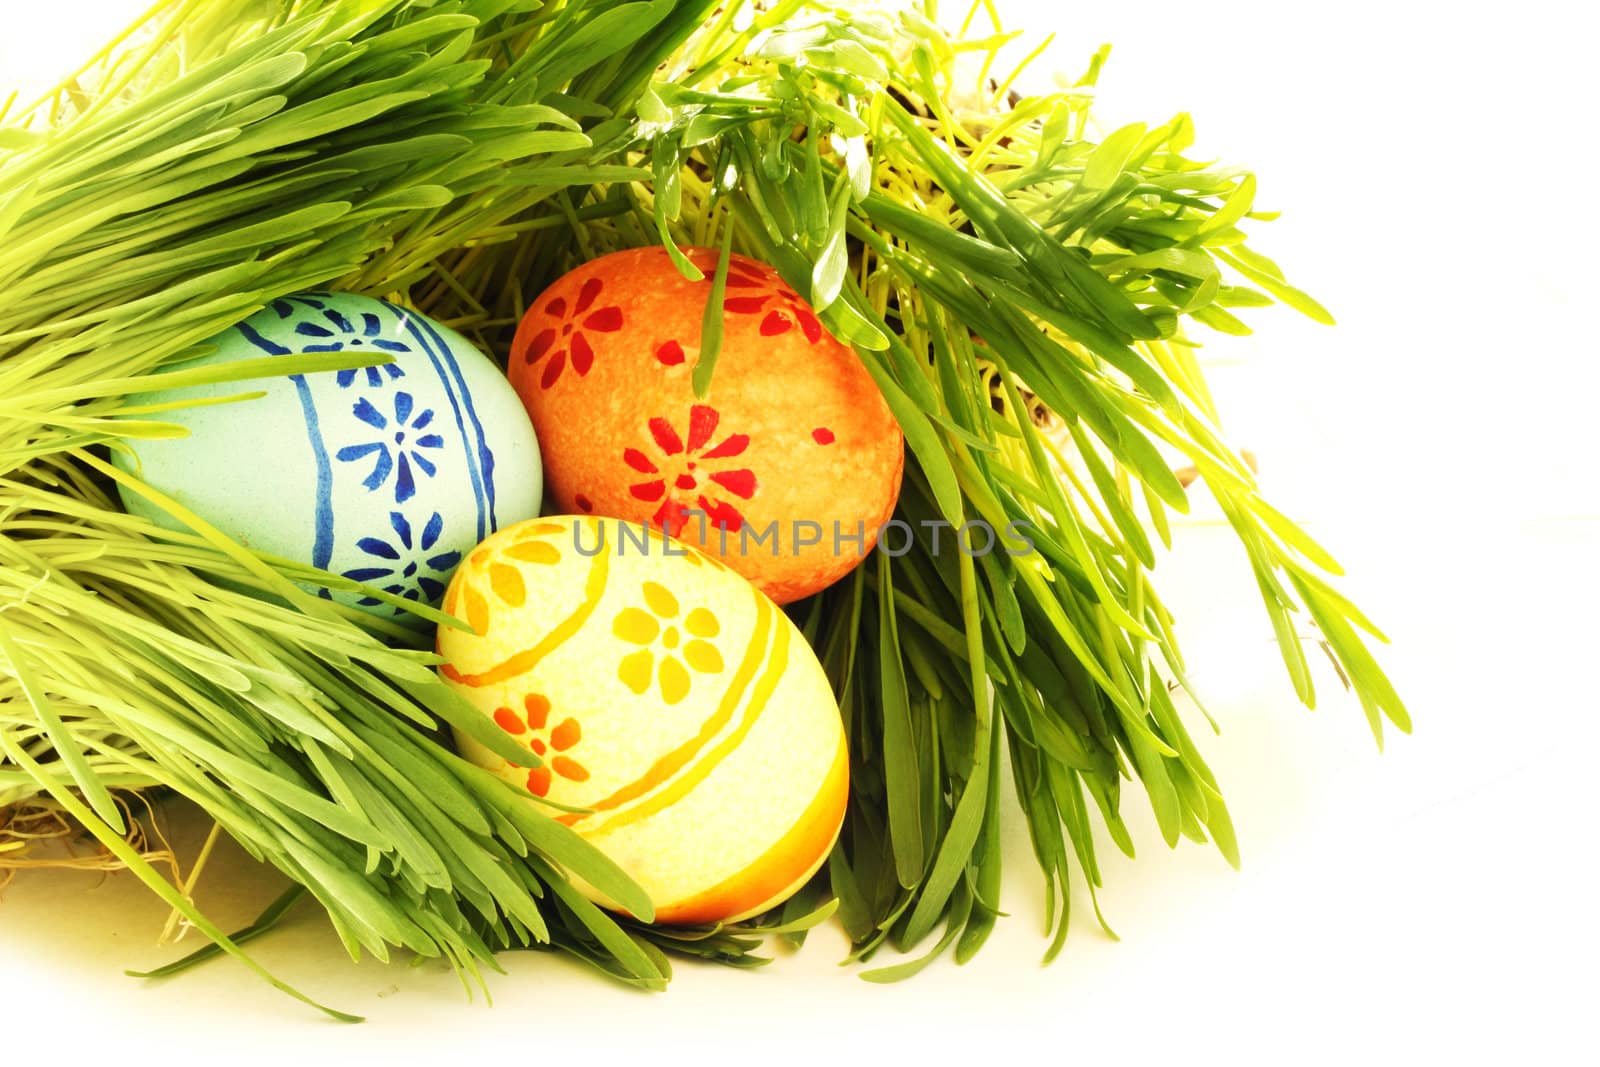 Easter eggs in grass by destillat